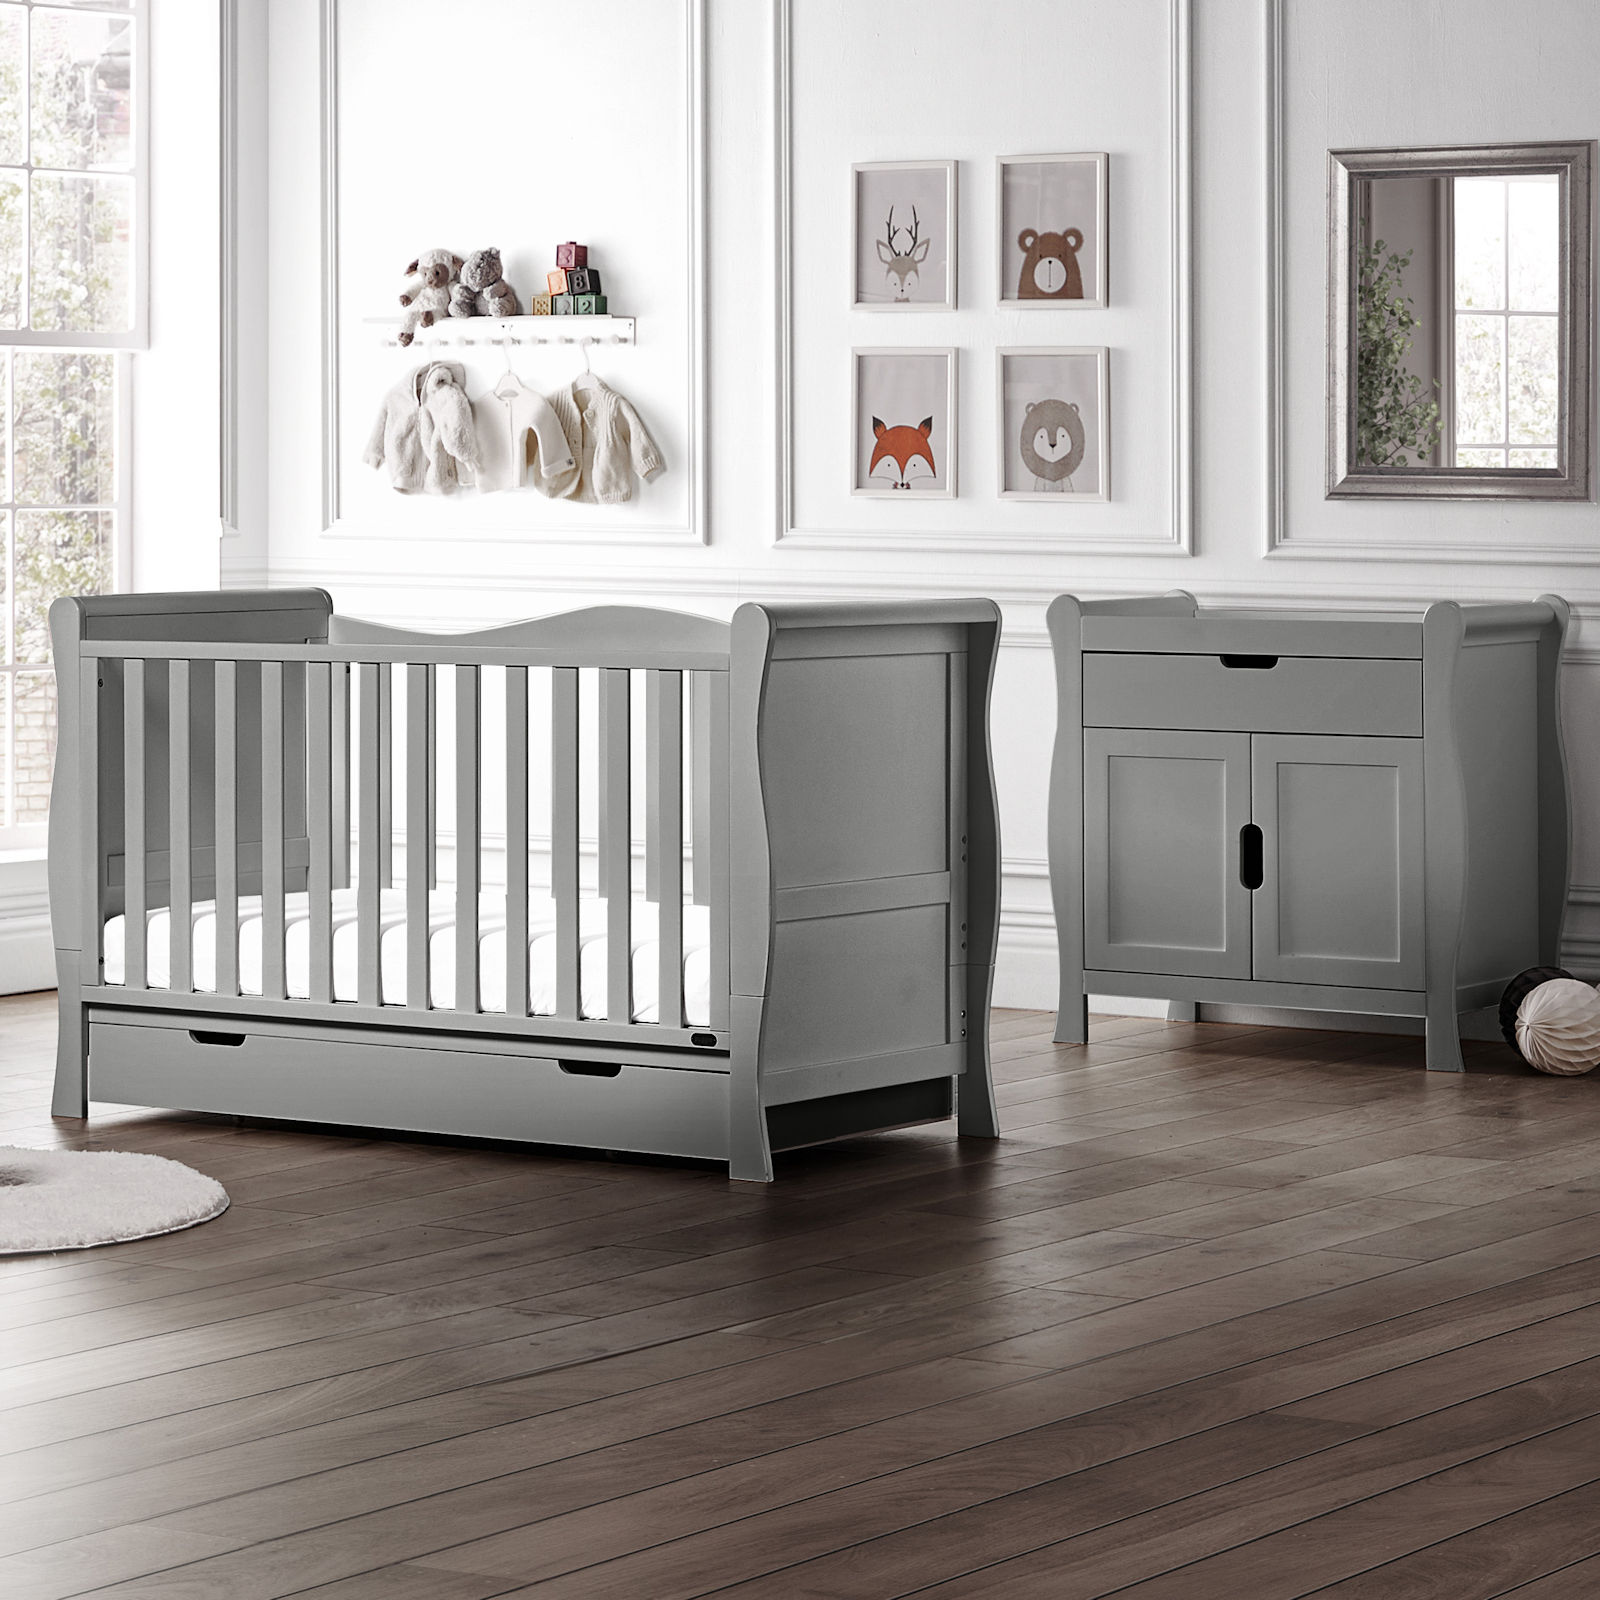 Puggle Prestbury Classic Deluxe Sleigh 5pc Nursery Furniture Set with Drawer & Fibre Mattress - Grey